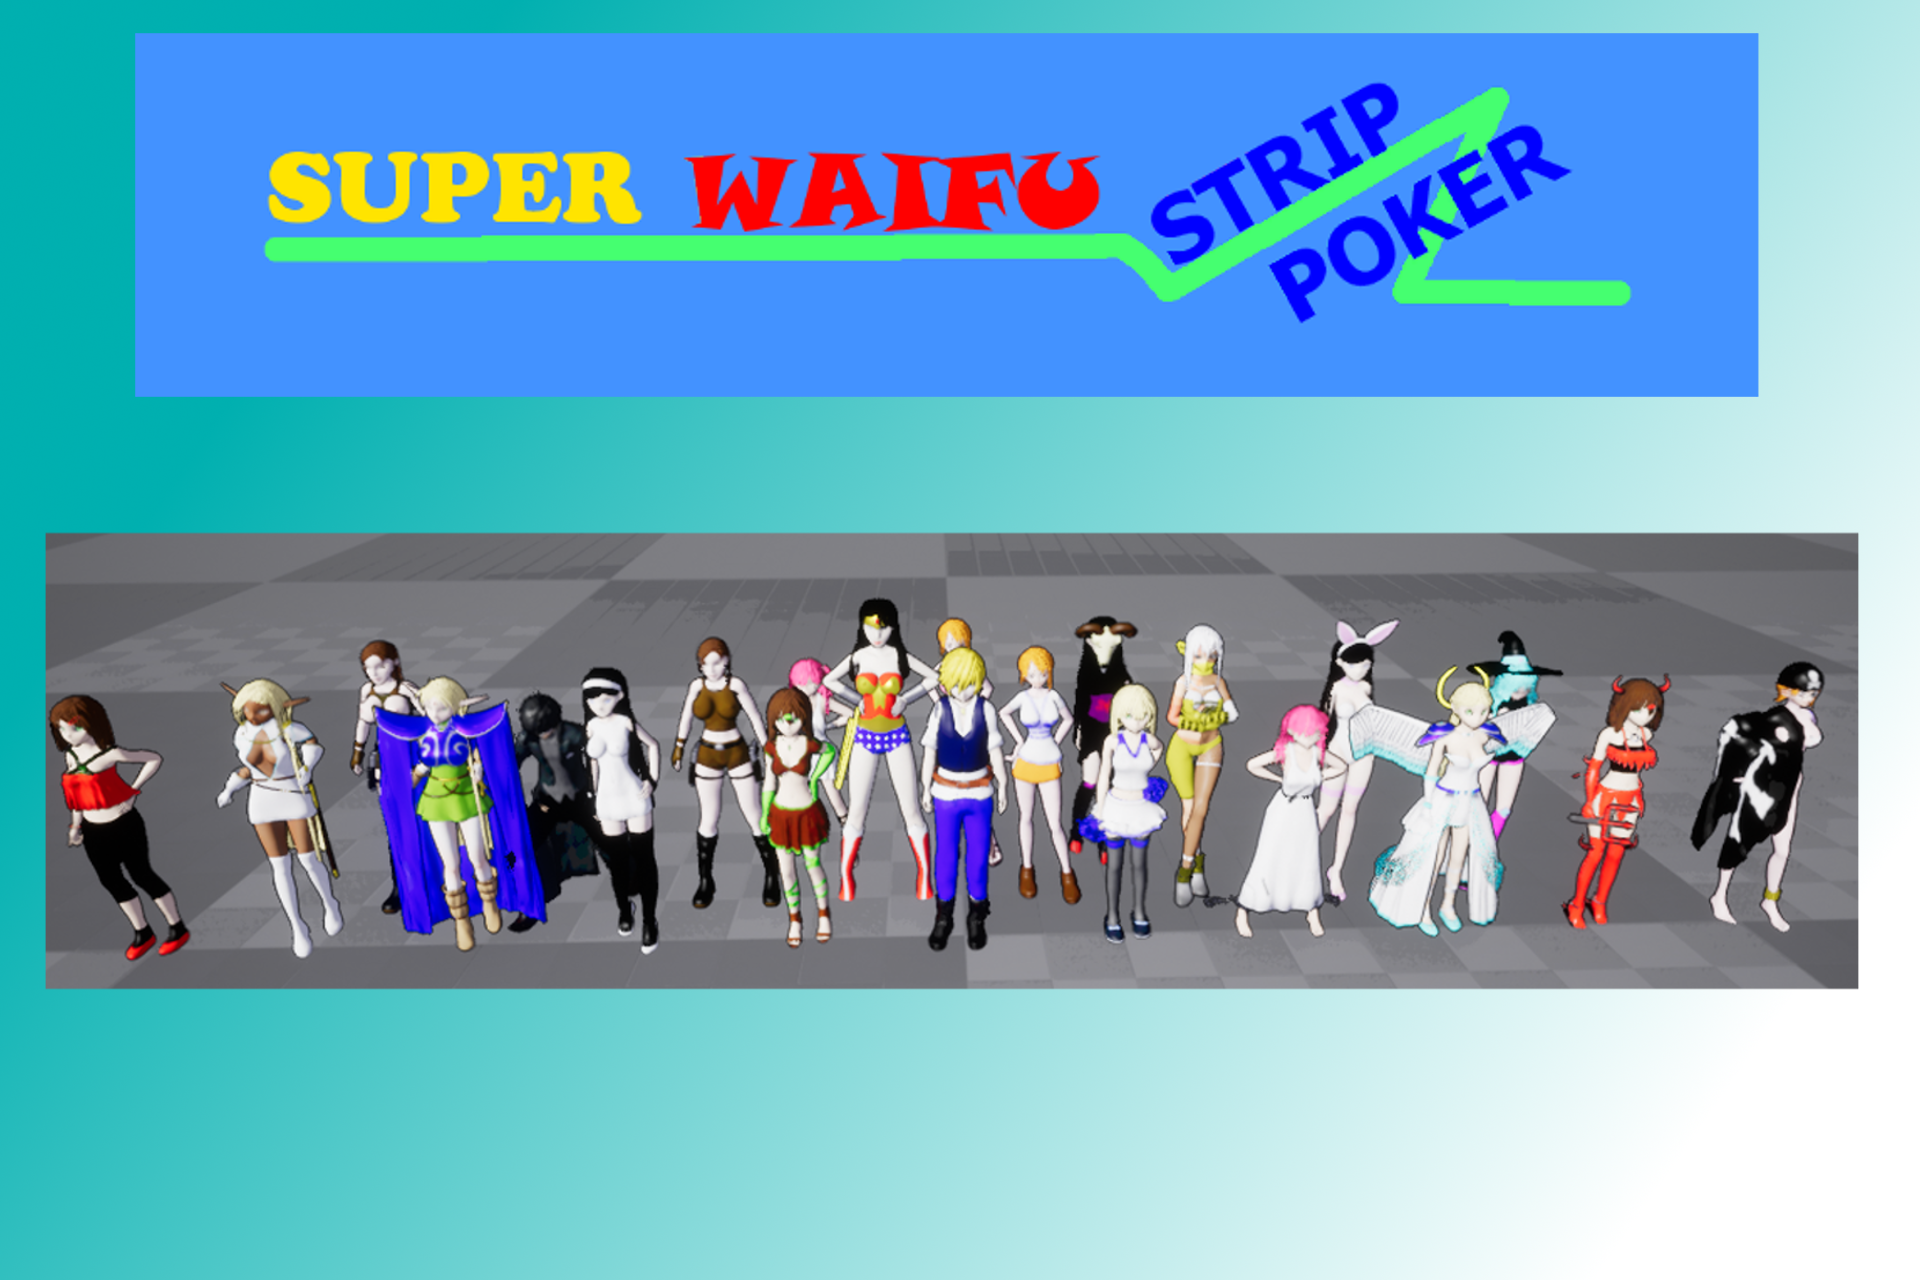 Super Waifu Strip Poker v0.73 - free game download, reviews, mega - xGames